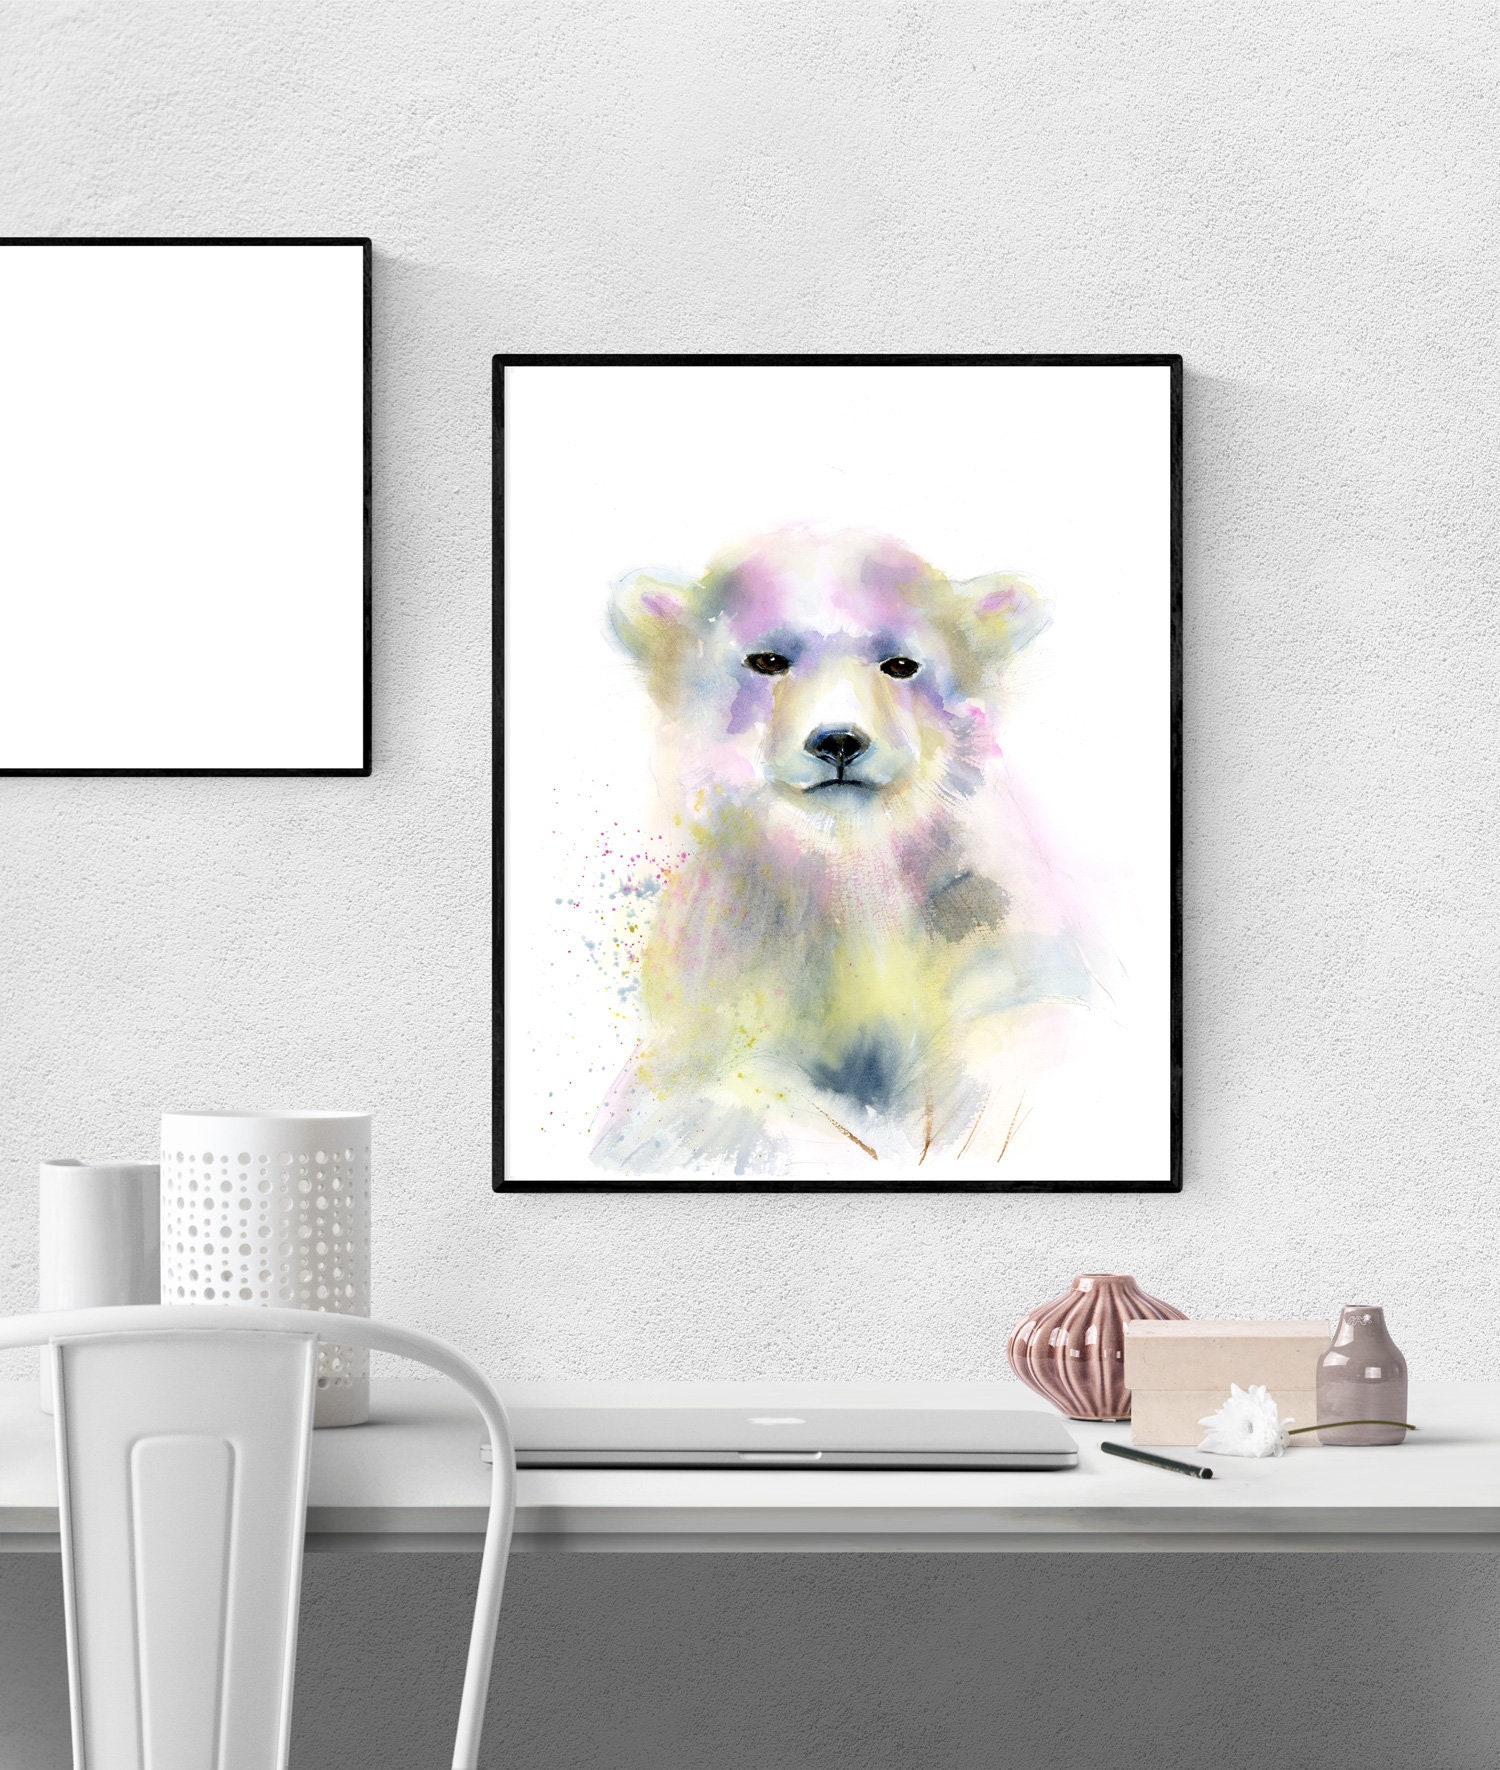 Polar bear print Of Original watercolor painting White animal | Etsy